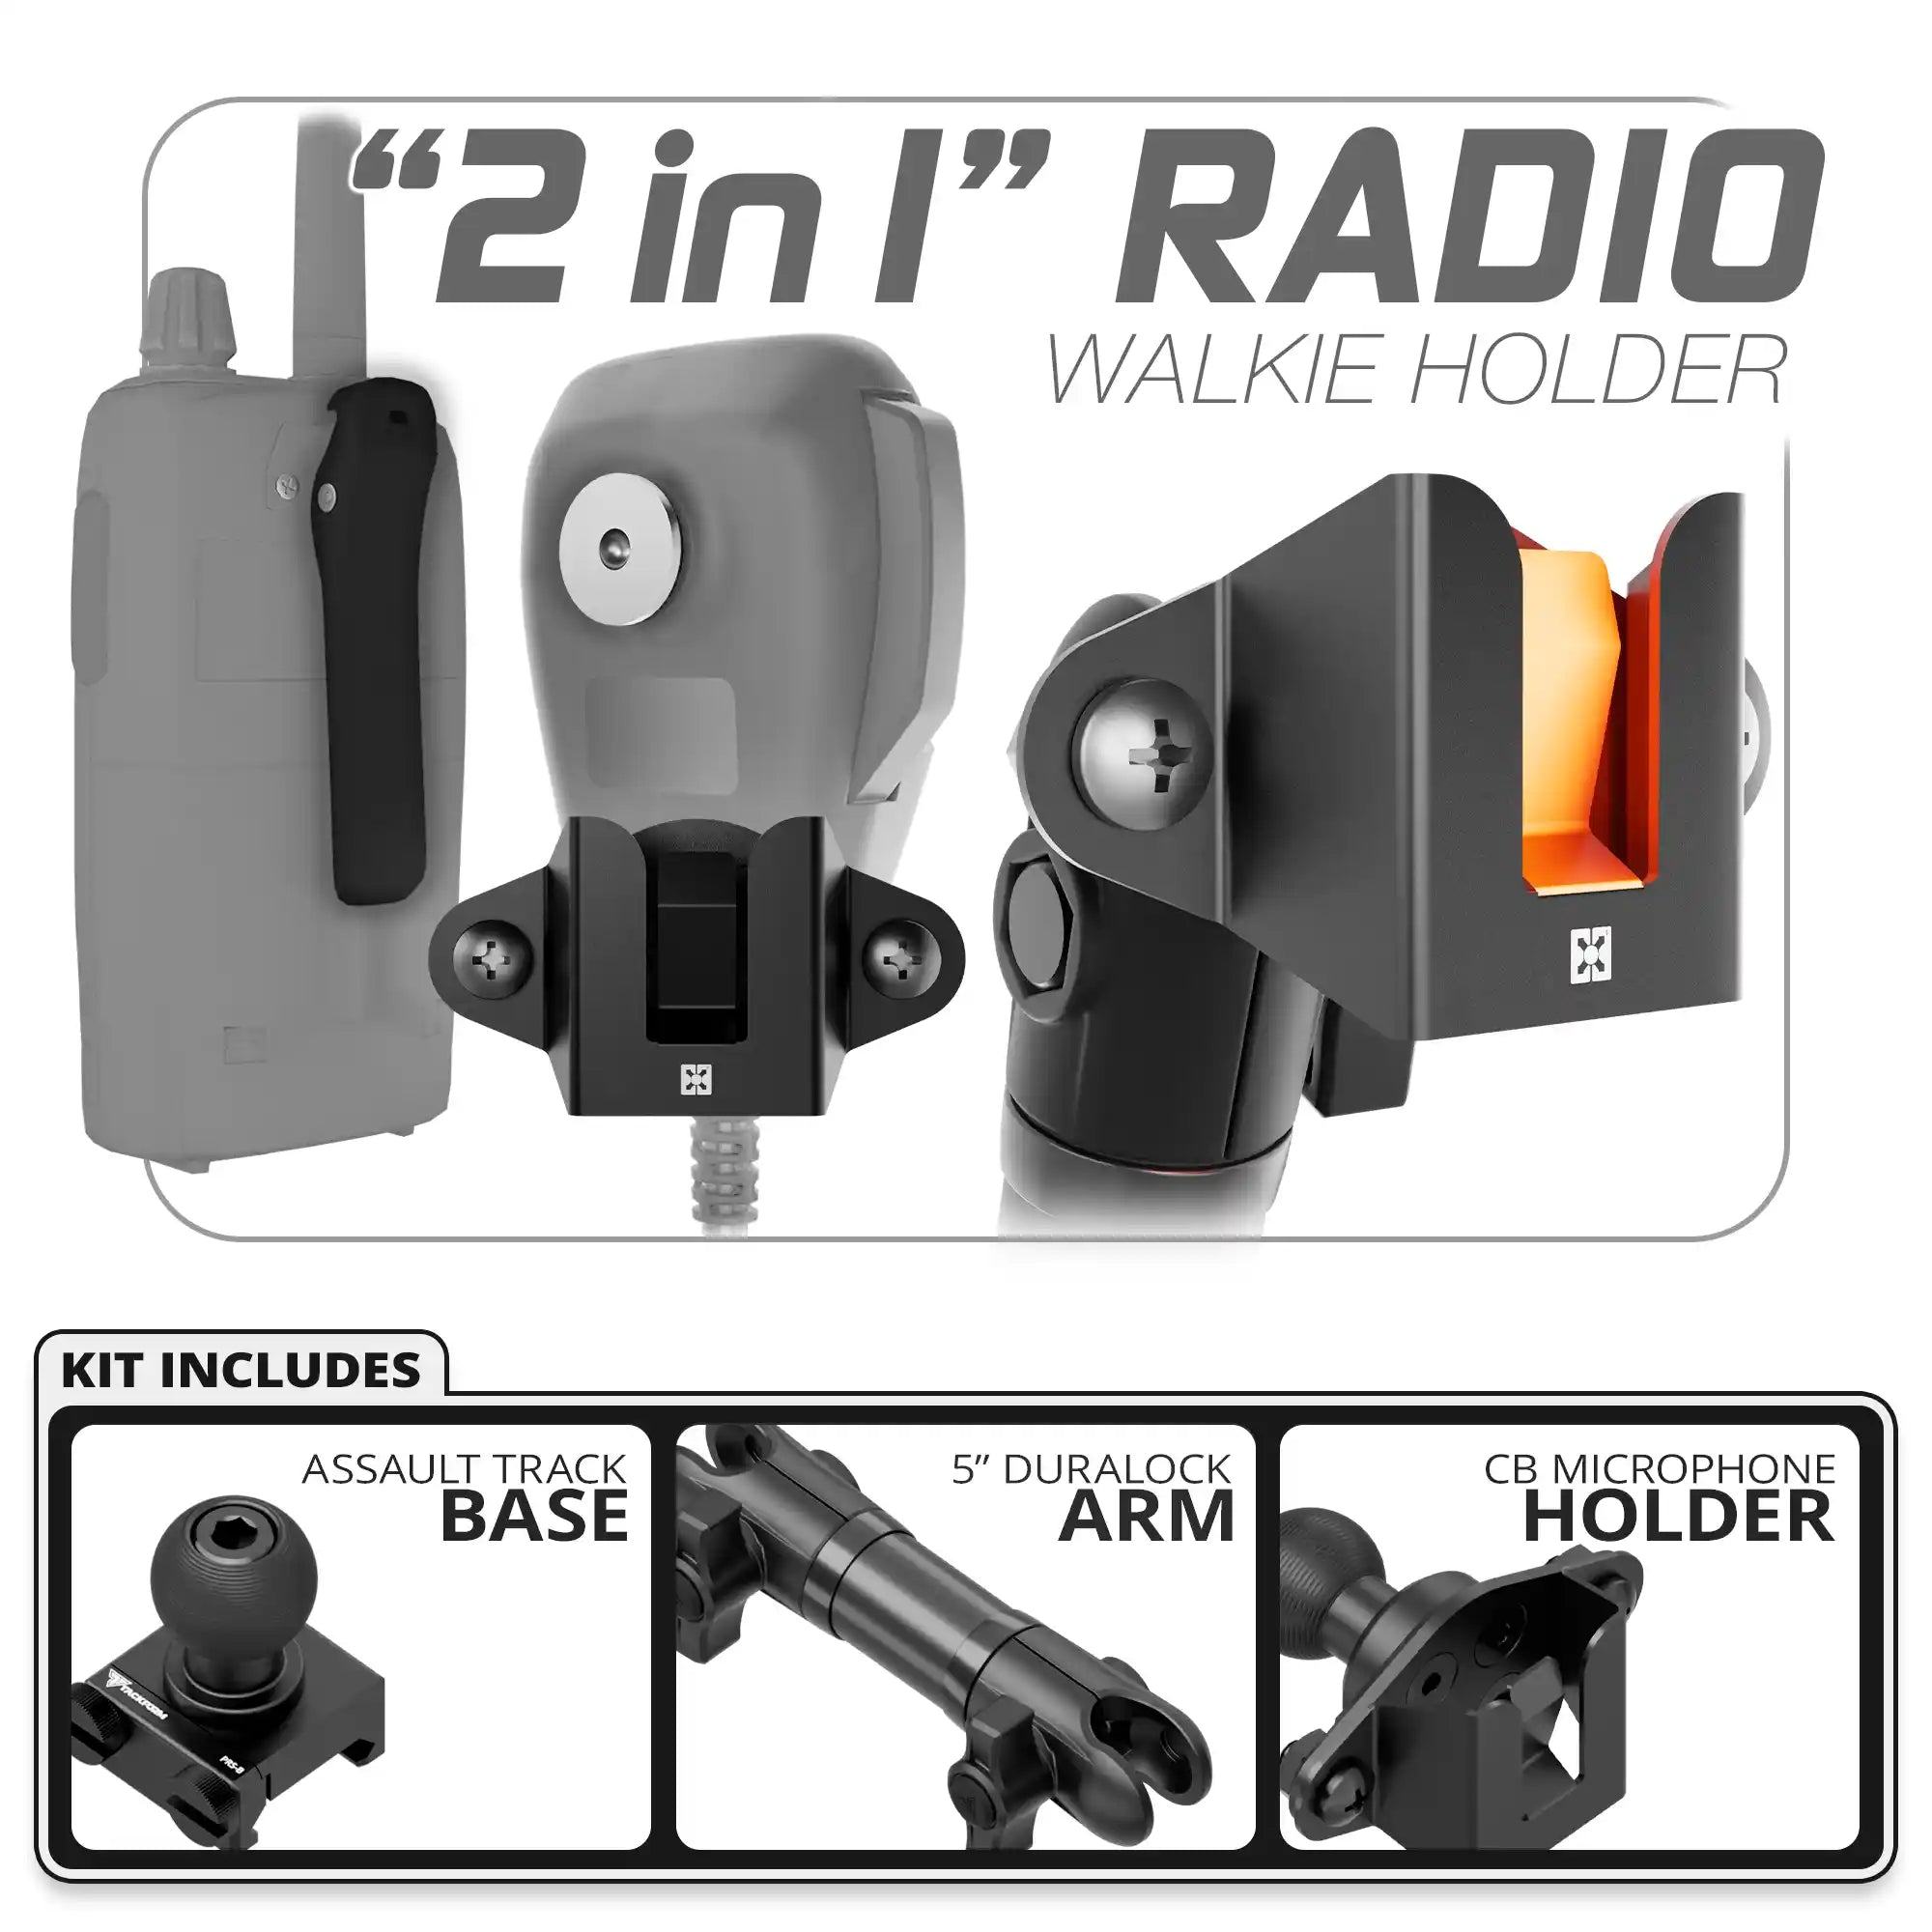 CB Radio/Microphone Holder | Assault Track Base | 5" DuraLock Arm